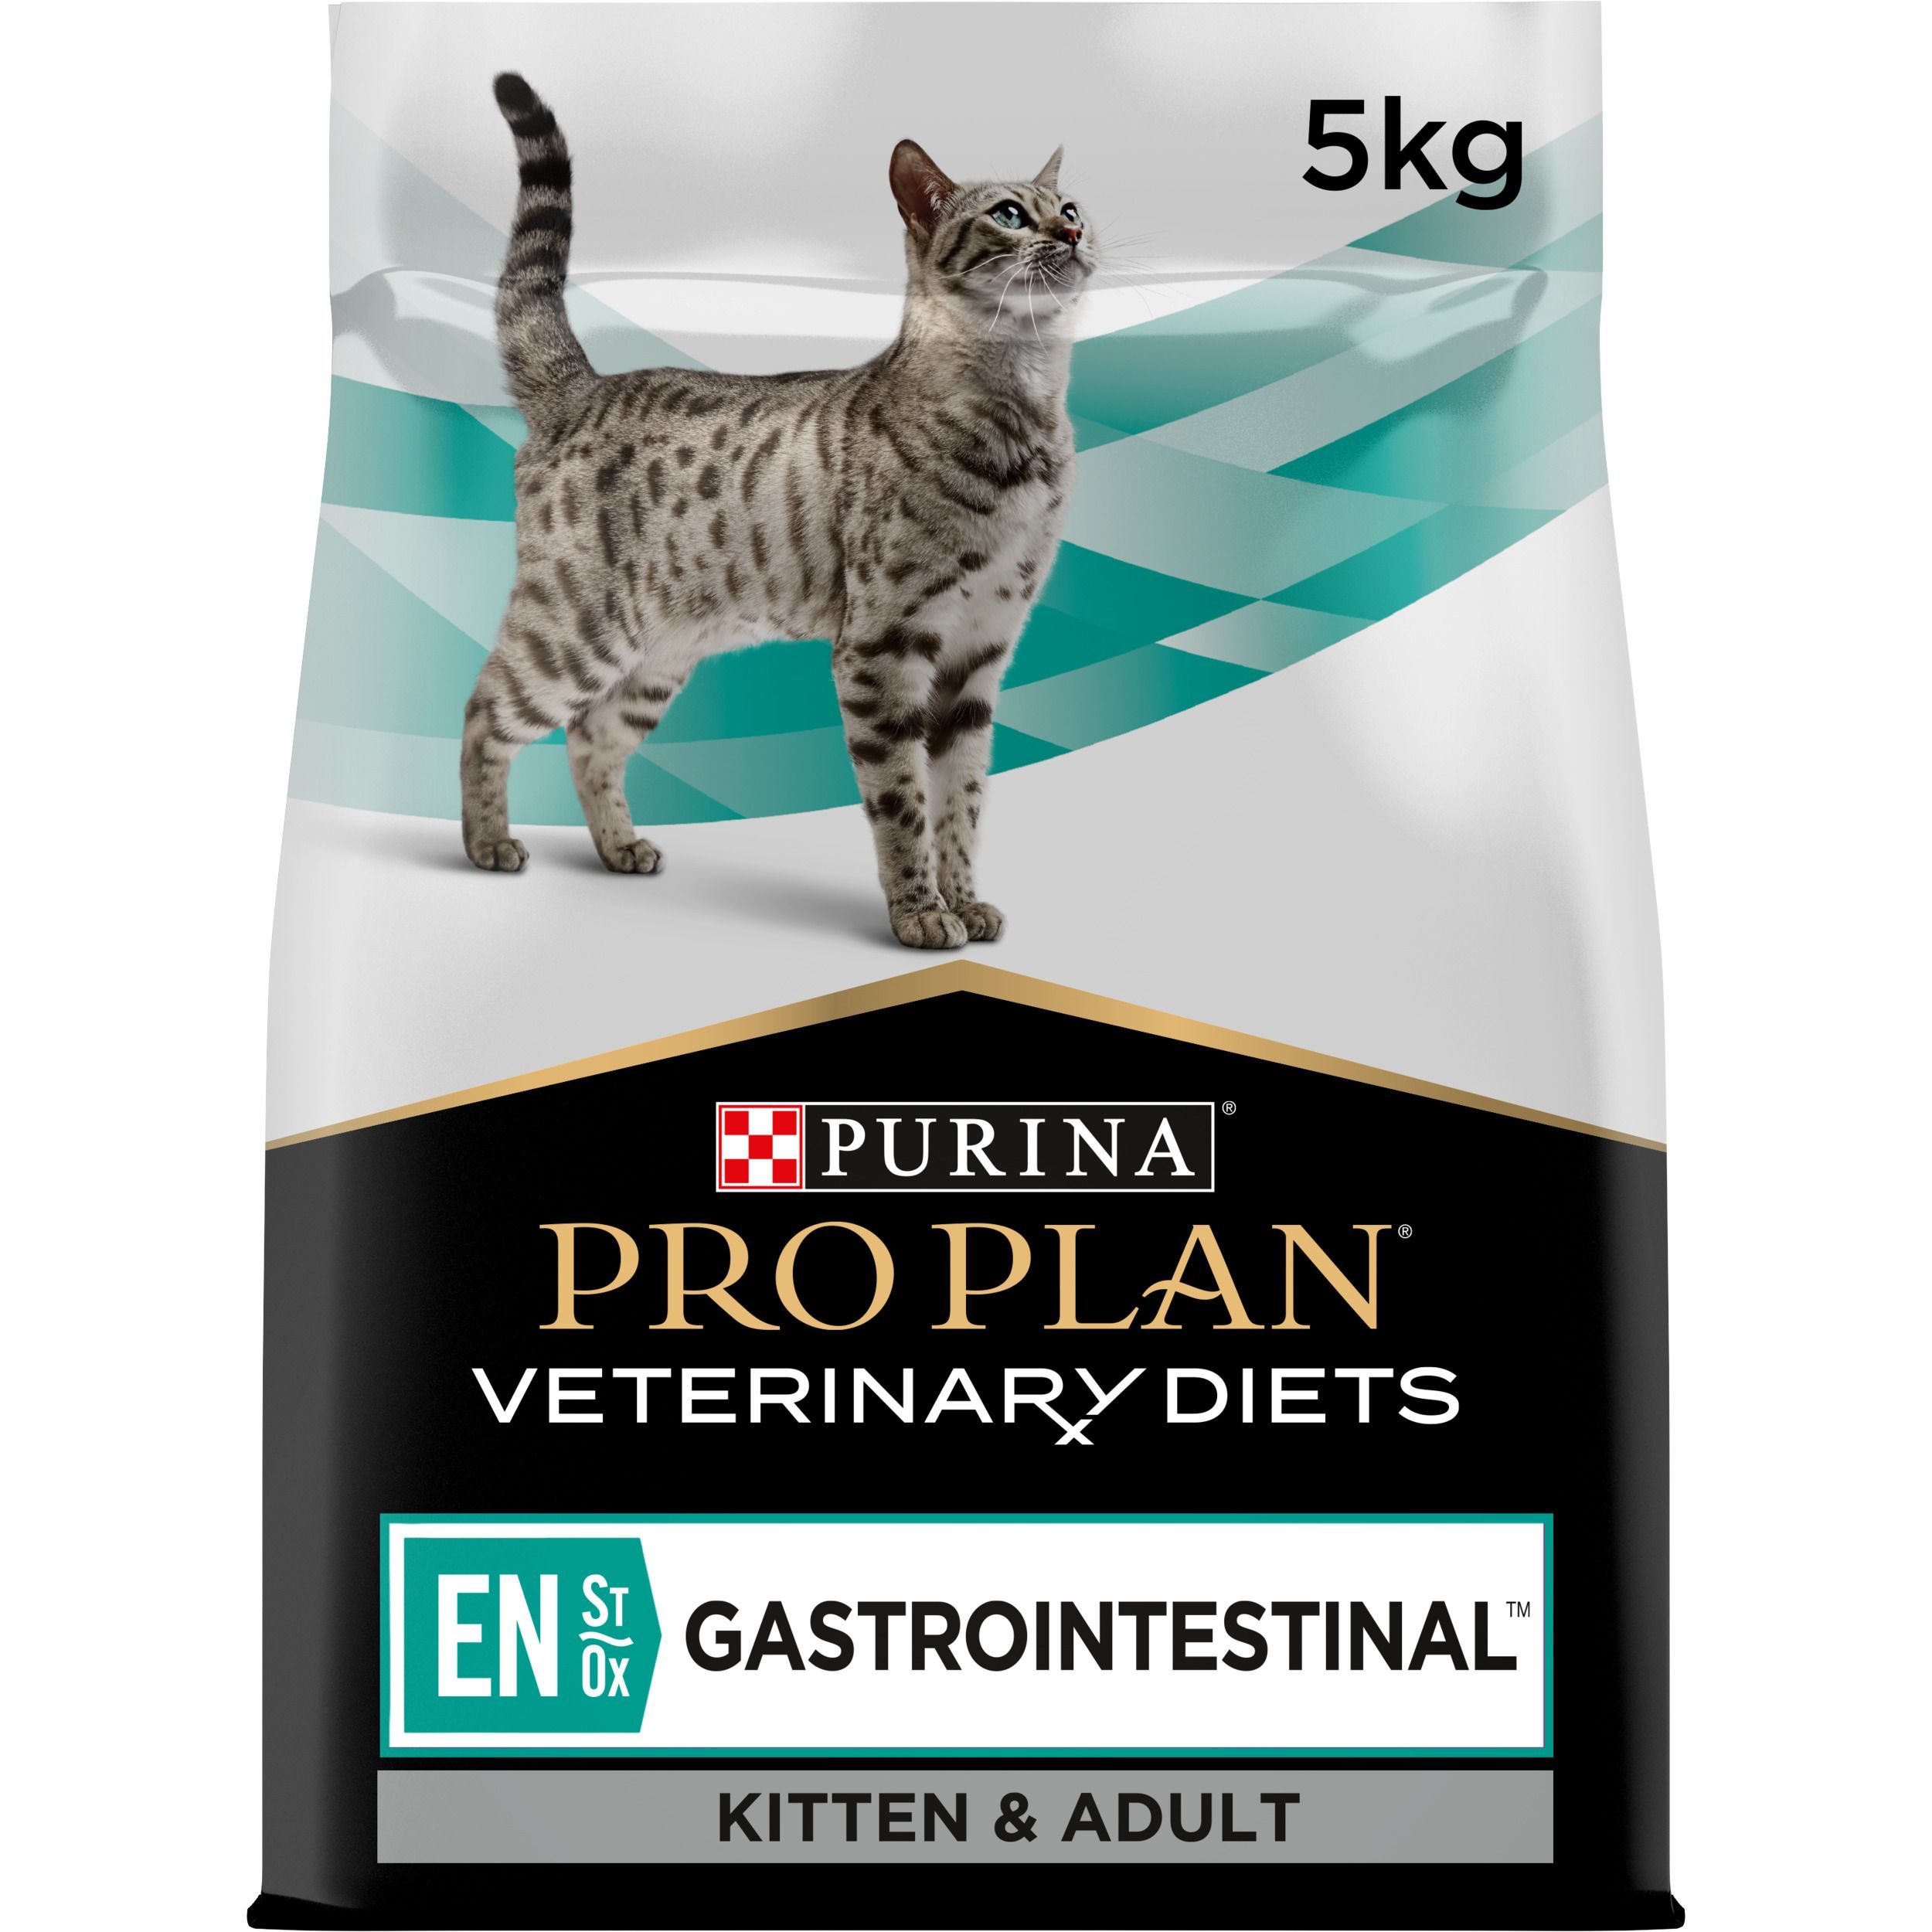 Pro plan veterinary diets цена. Purina Pro Plan Veterinary Diets ur Urinary. Purina Pro Plan Veterinary Diets om obesity Management для кошек 1.5. Pro Plan Veterinary Diets Urinary для кошек.